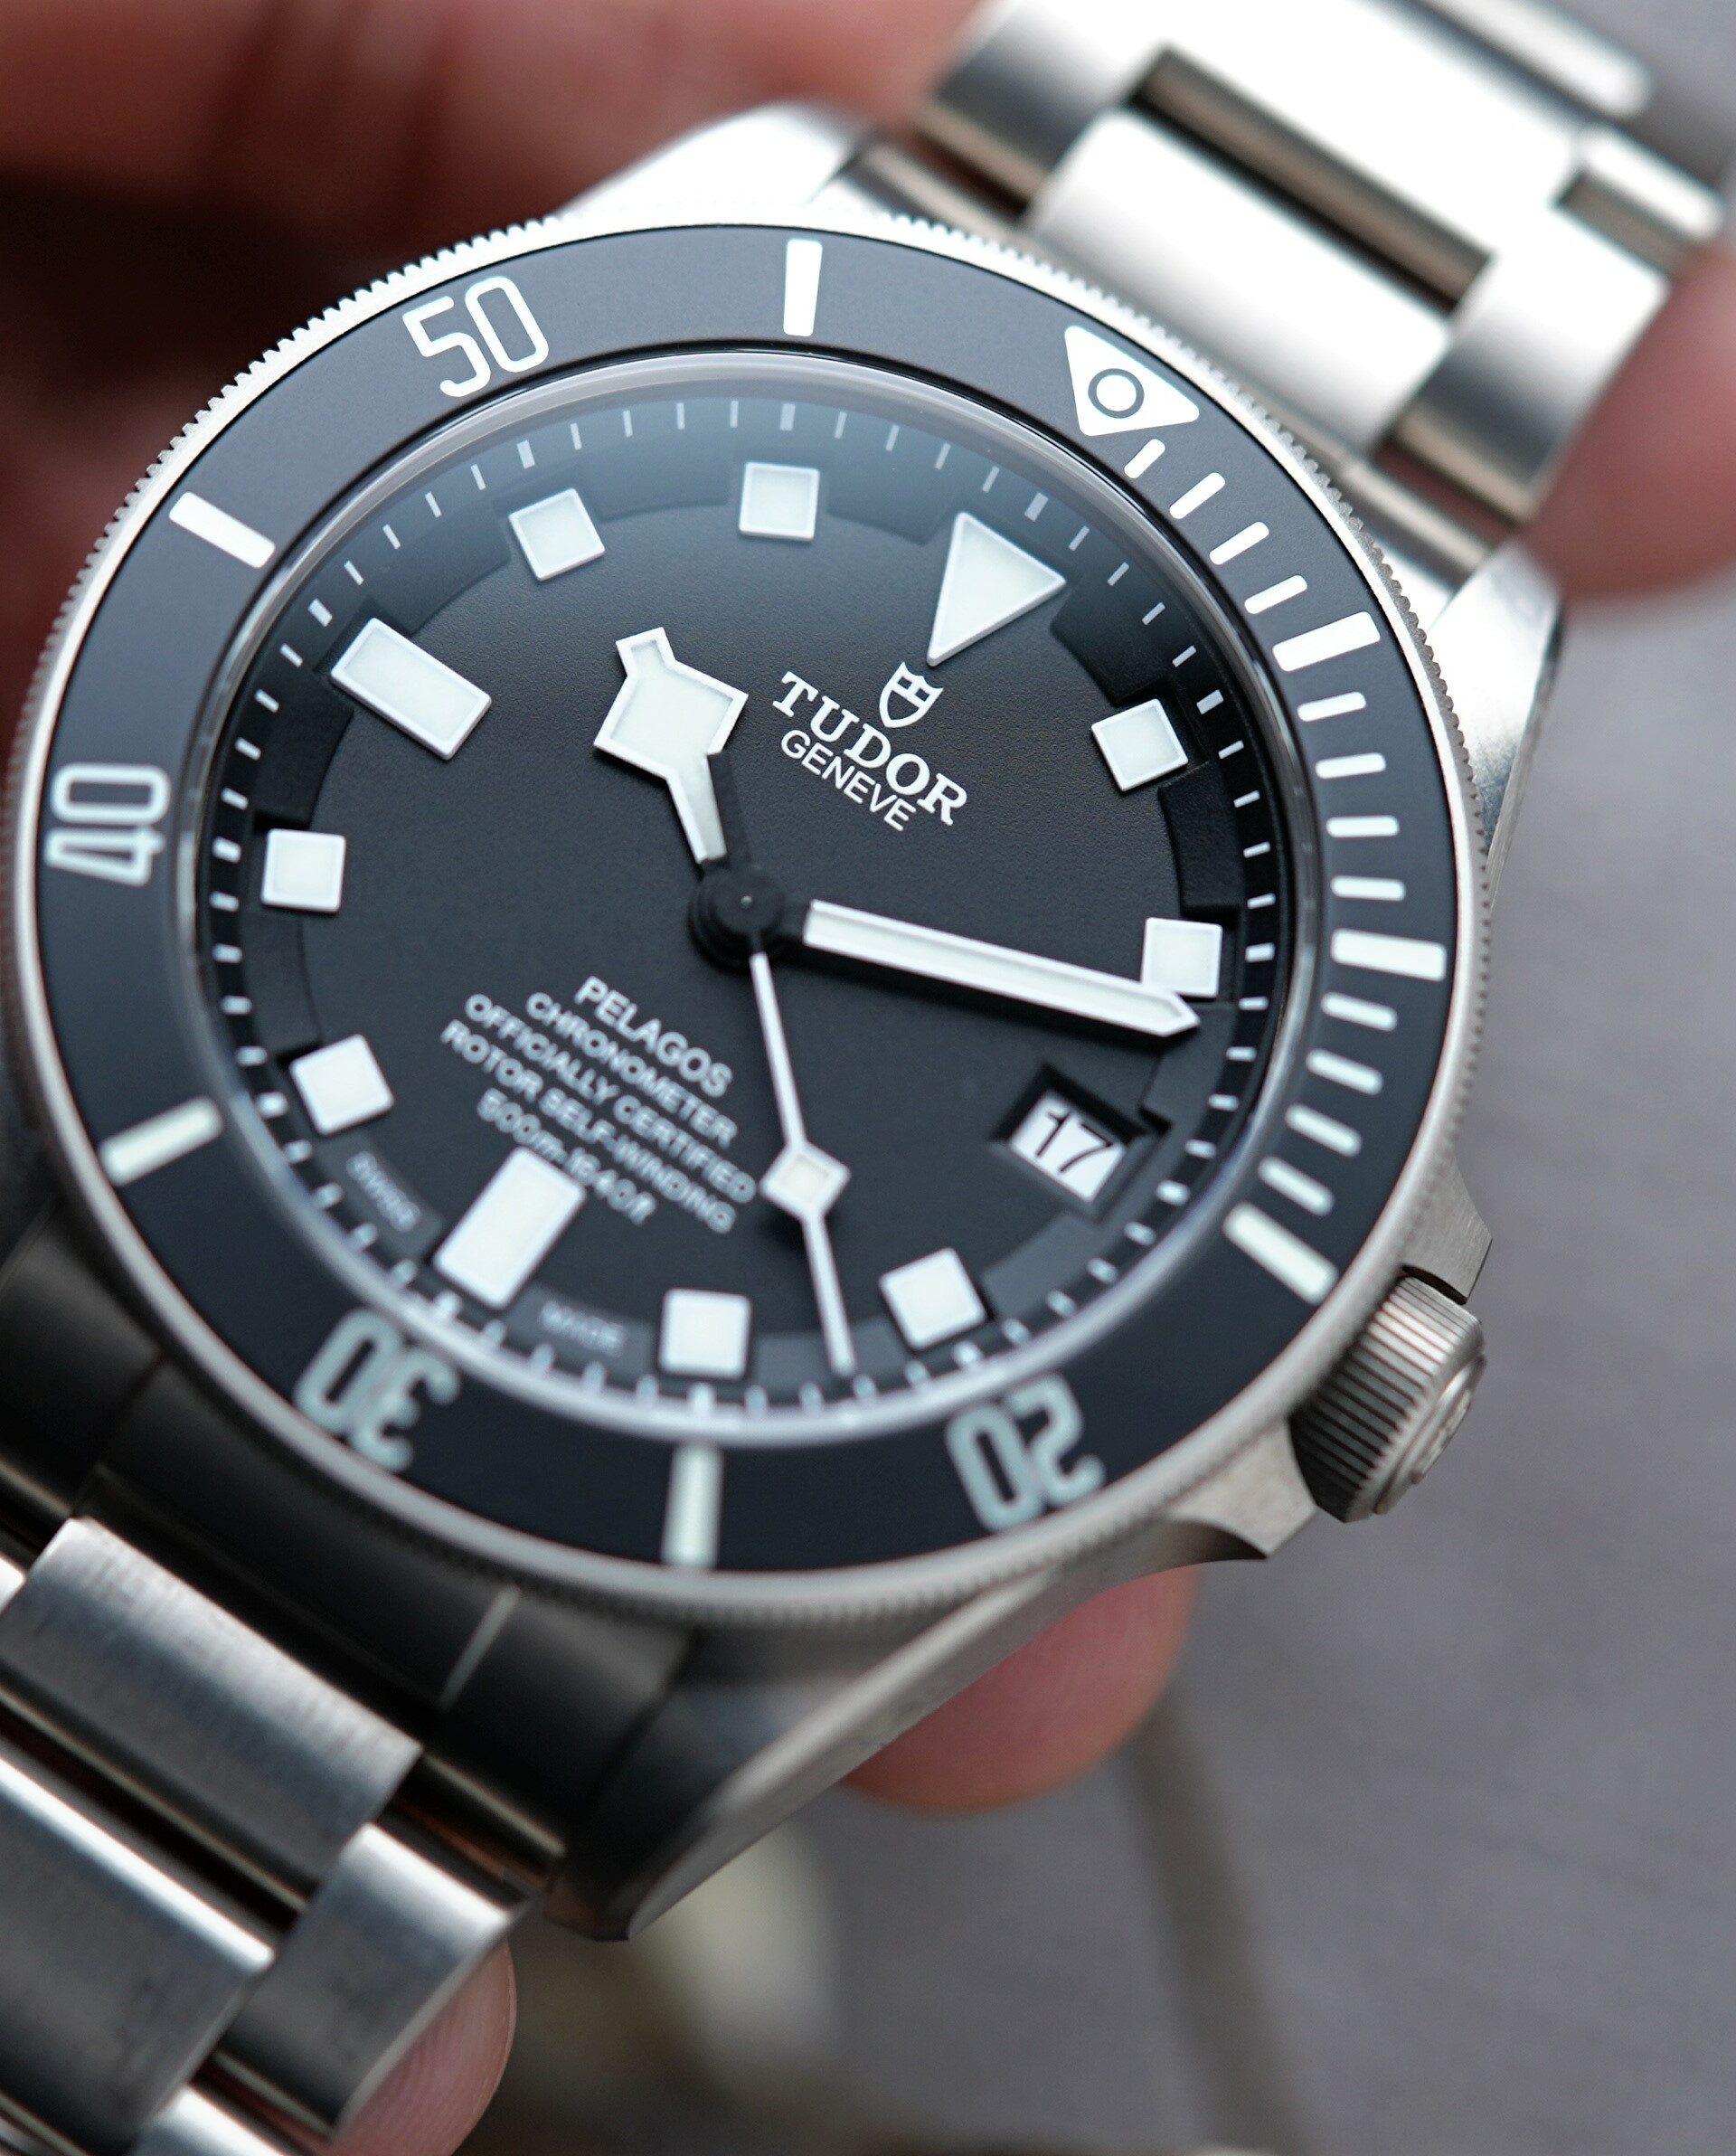 Tudor Pelagos 25600TN watch being displayed in hand.